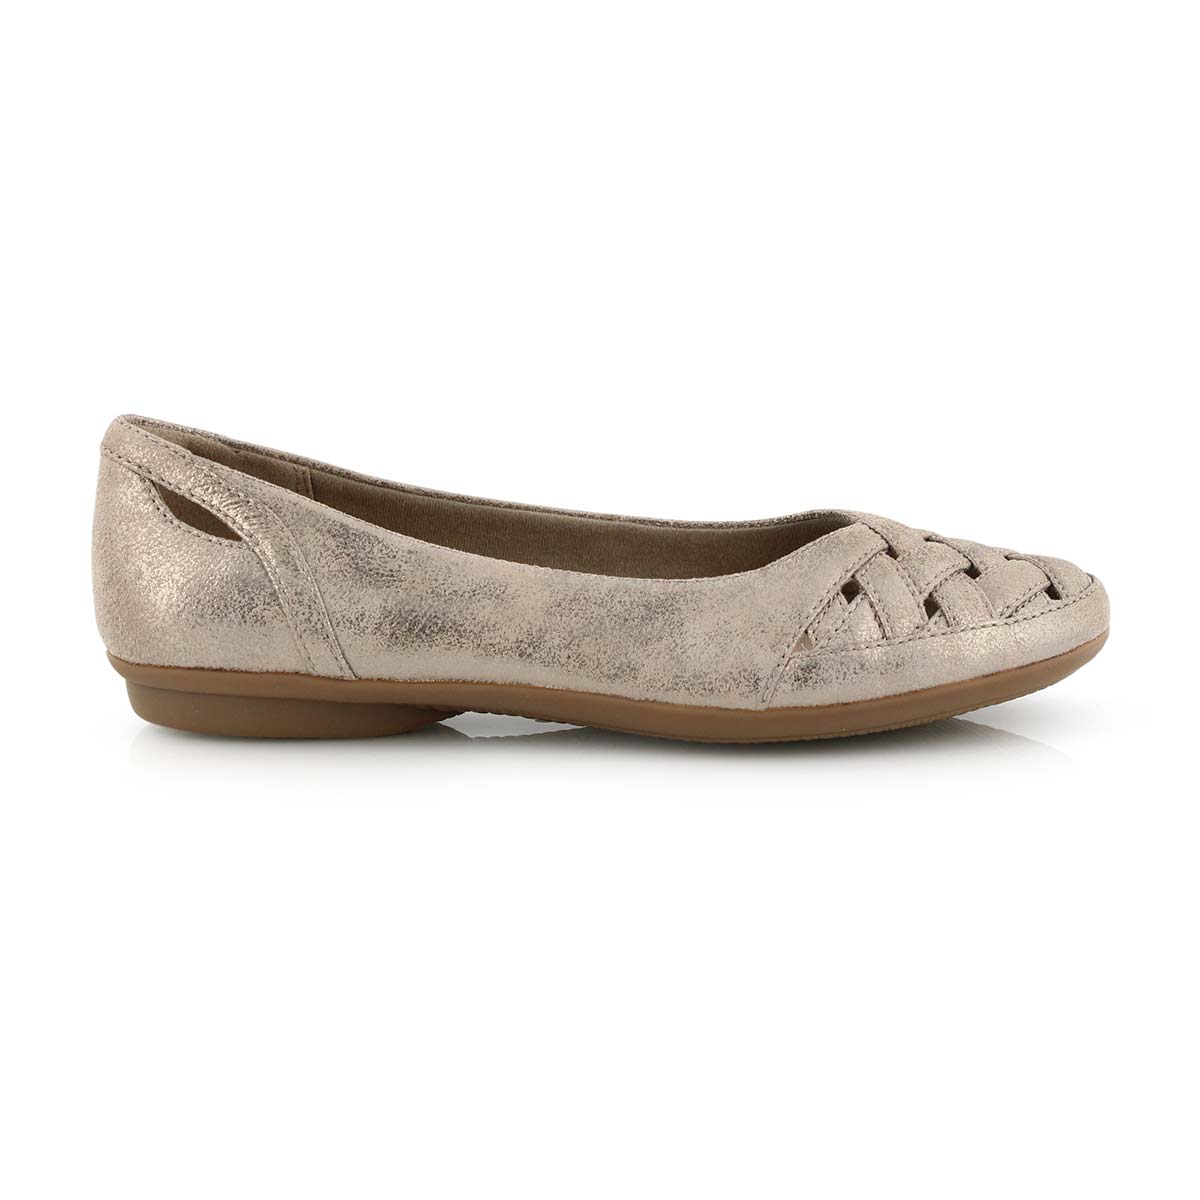 Clarks Womens Gracelin Maze Ballet Flat Shoes Pewter Leather Size 7.5 Wide US